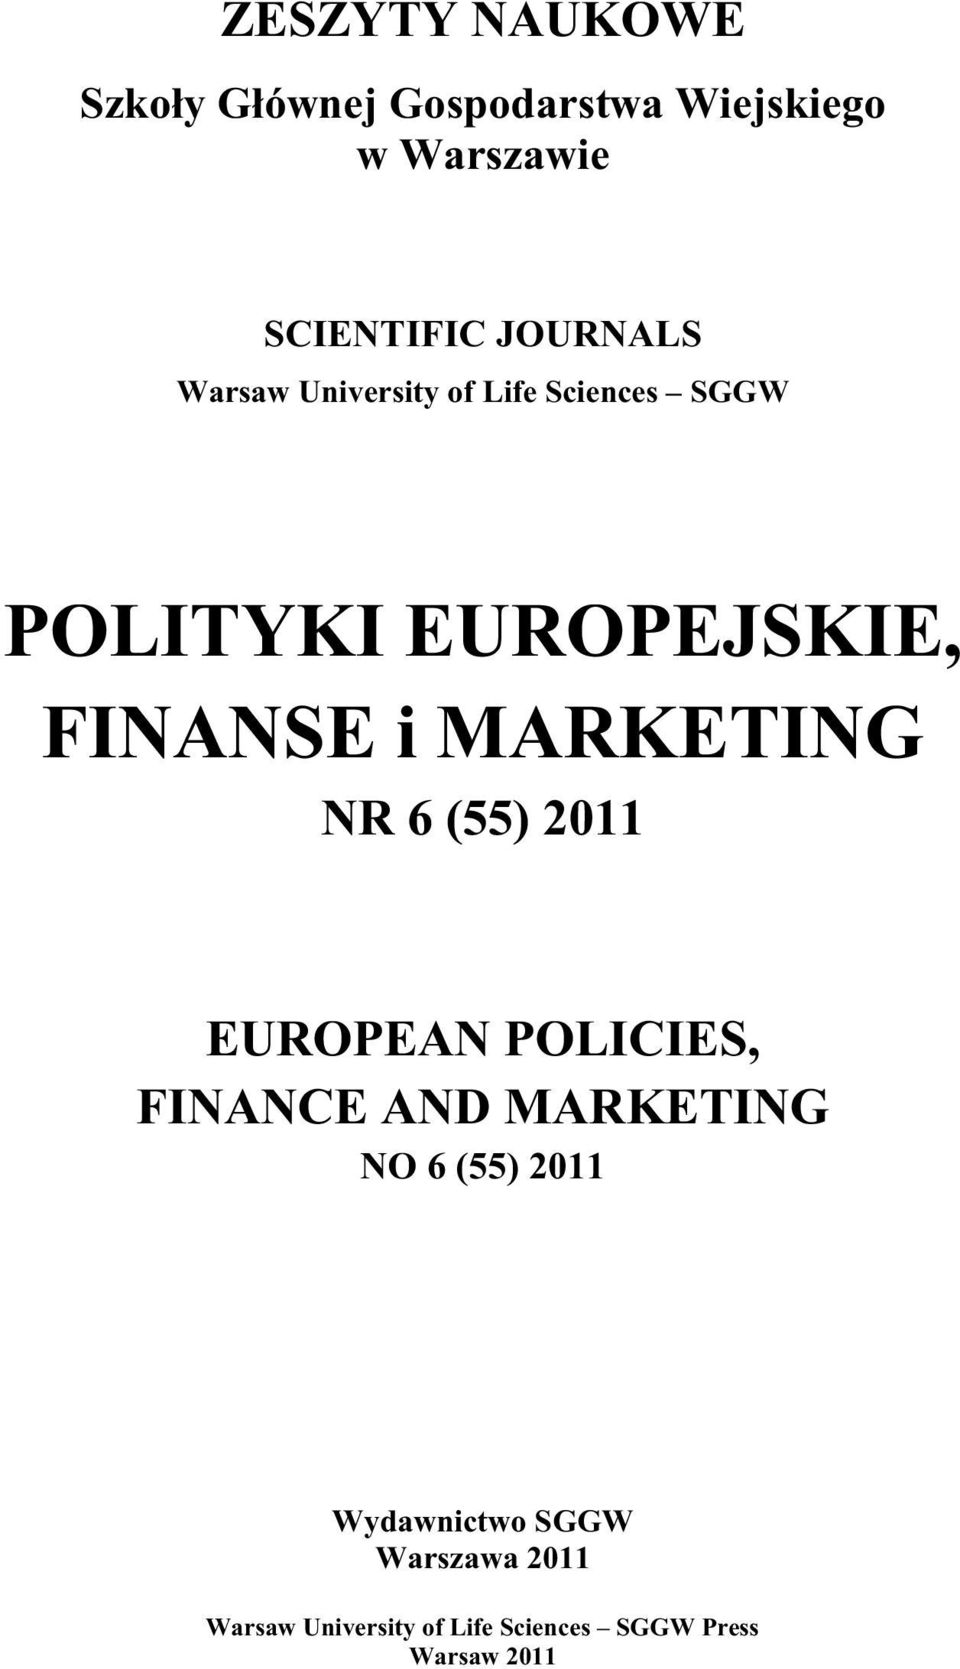 MARKETING NR 6 (55) 2011 EUROPEAN POLICIES, FINANCE AND MARKETING NO 6 (55) 2011